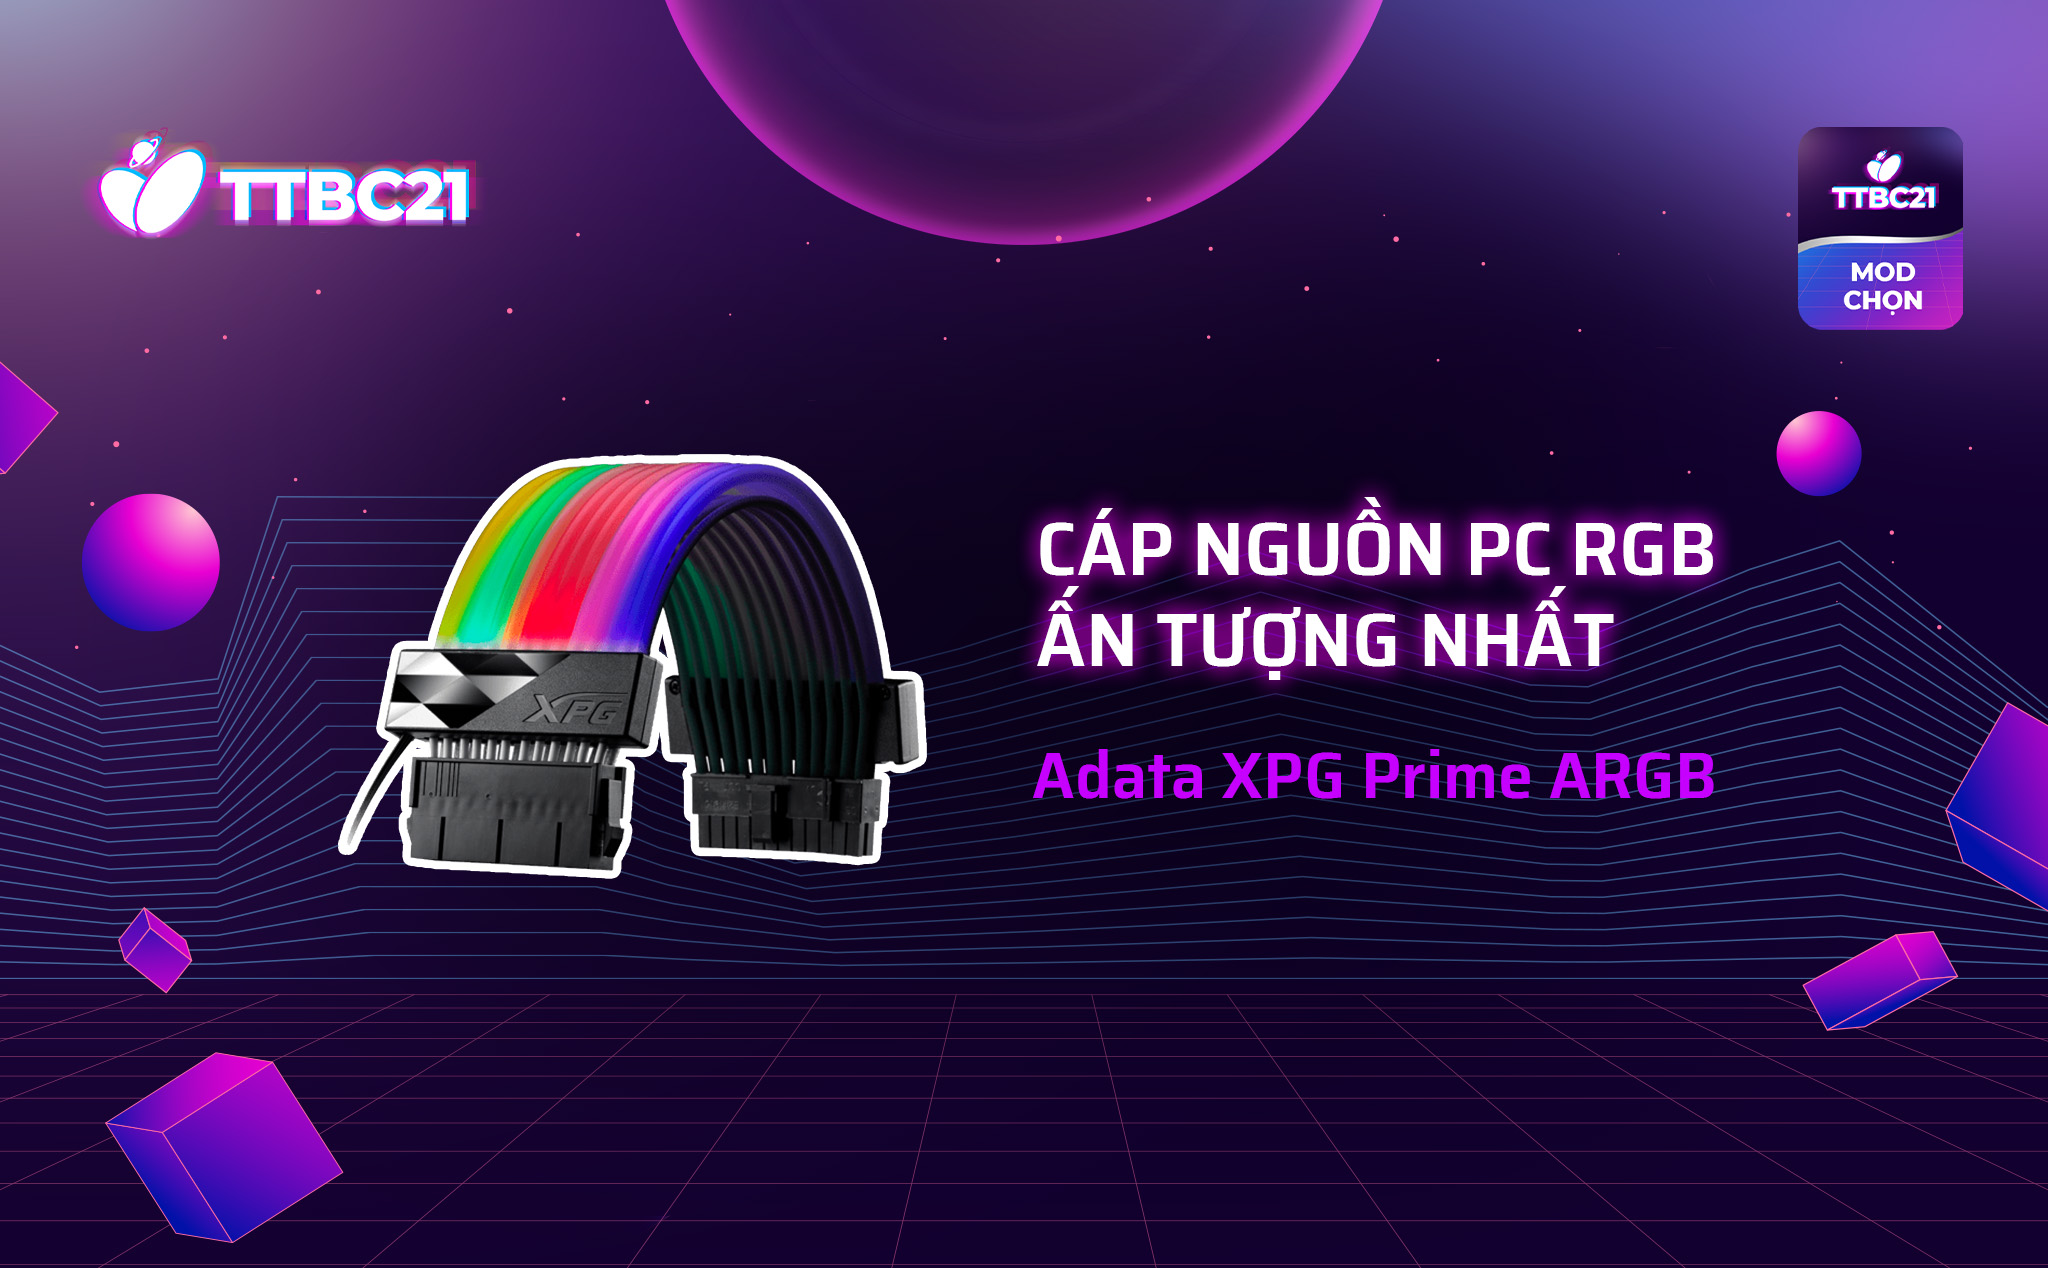 #TTBC21 – Mod Choice: Adata XPG Prime ARGB, cáp nguồn PC RGB ấn tượng nhất